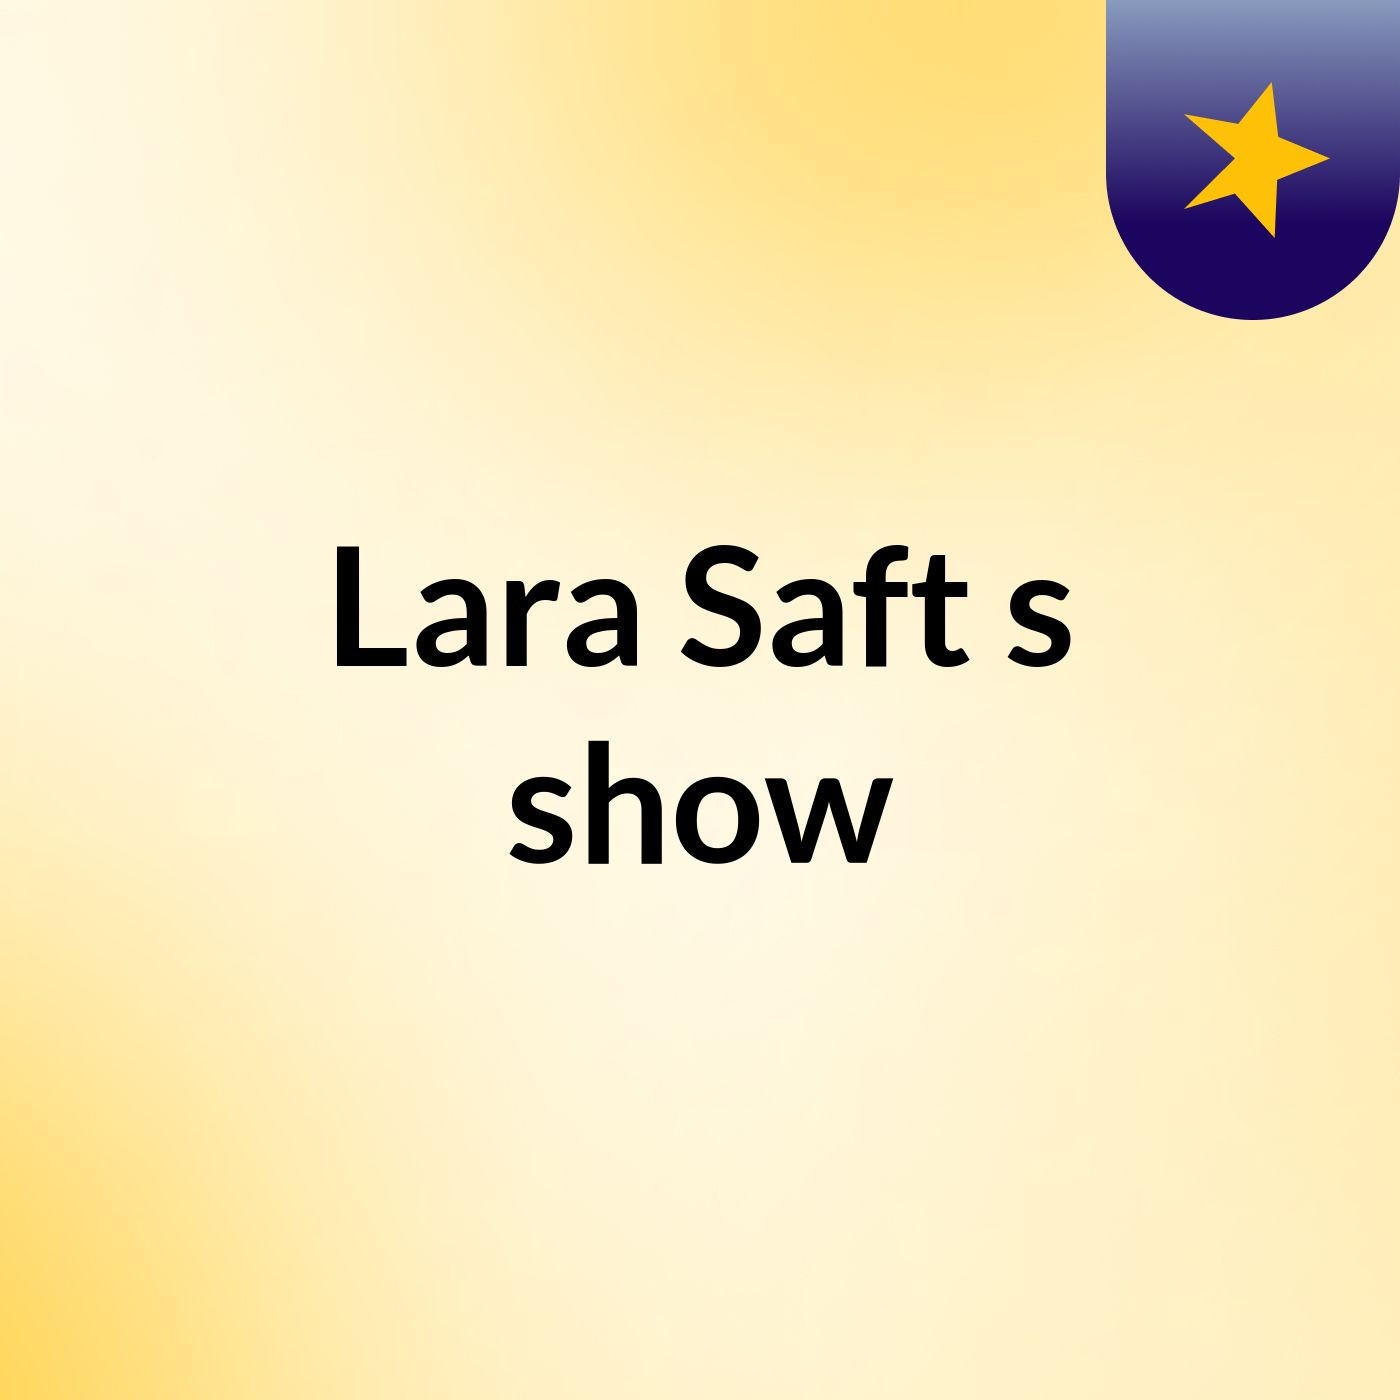 Lara Saft's show